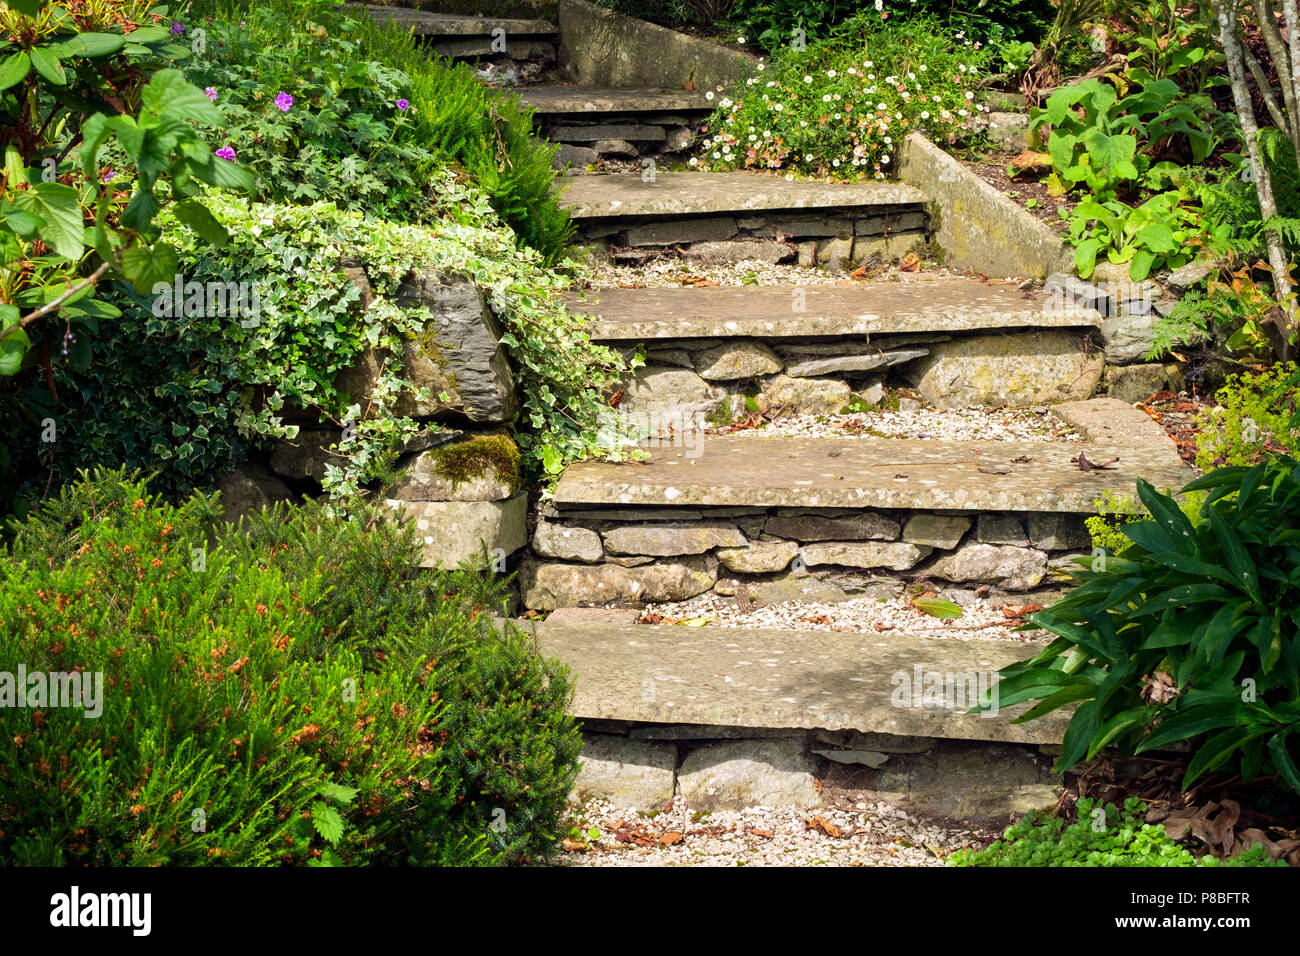 Mature Summer Garden Shrubs Crowded Alongside Rustic Stone Slab Path Steps Stock Photo Alamy